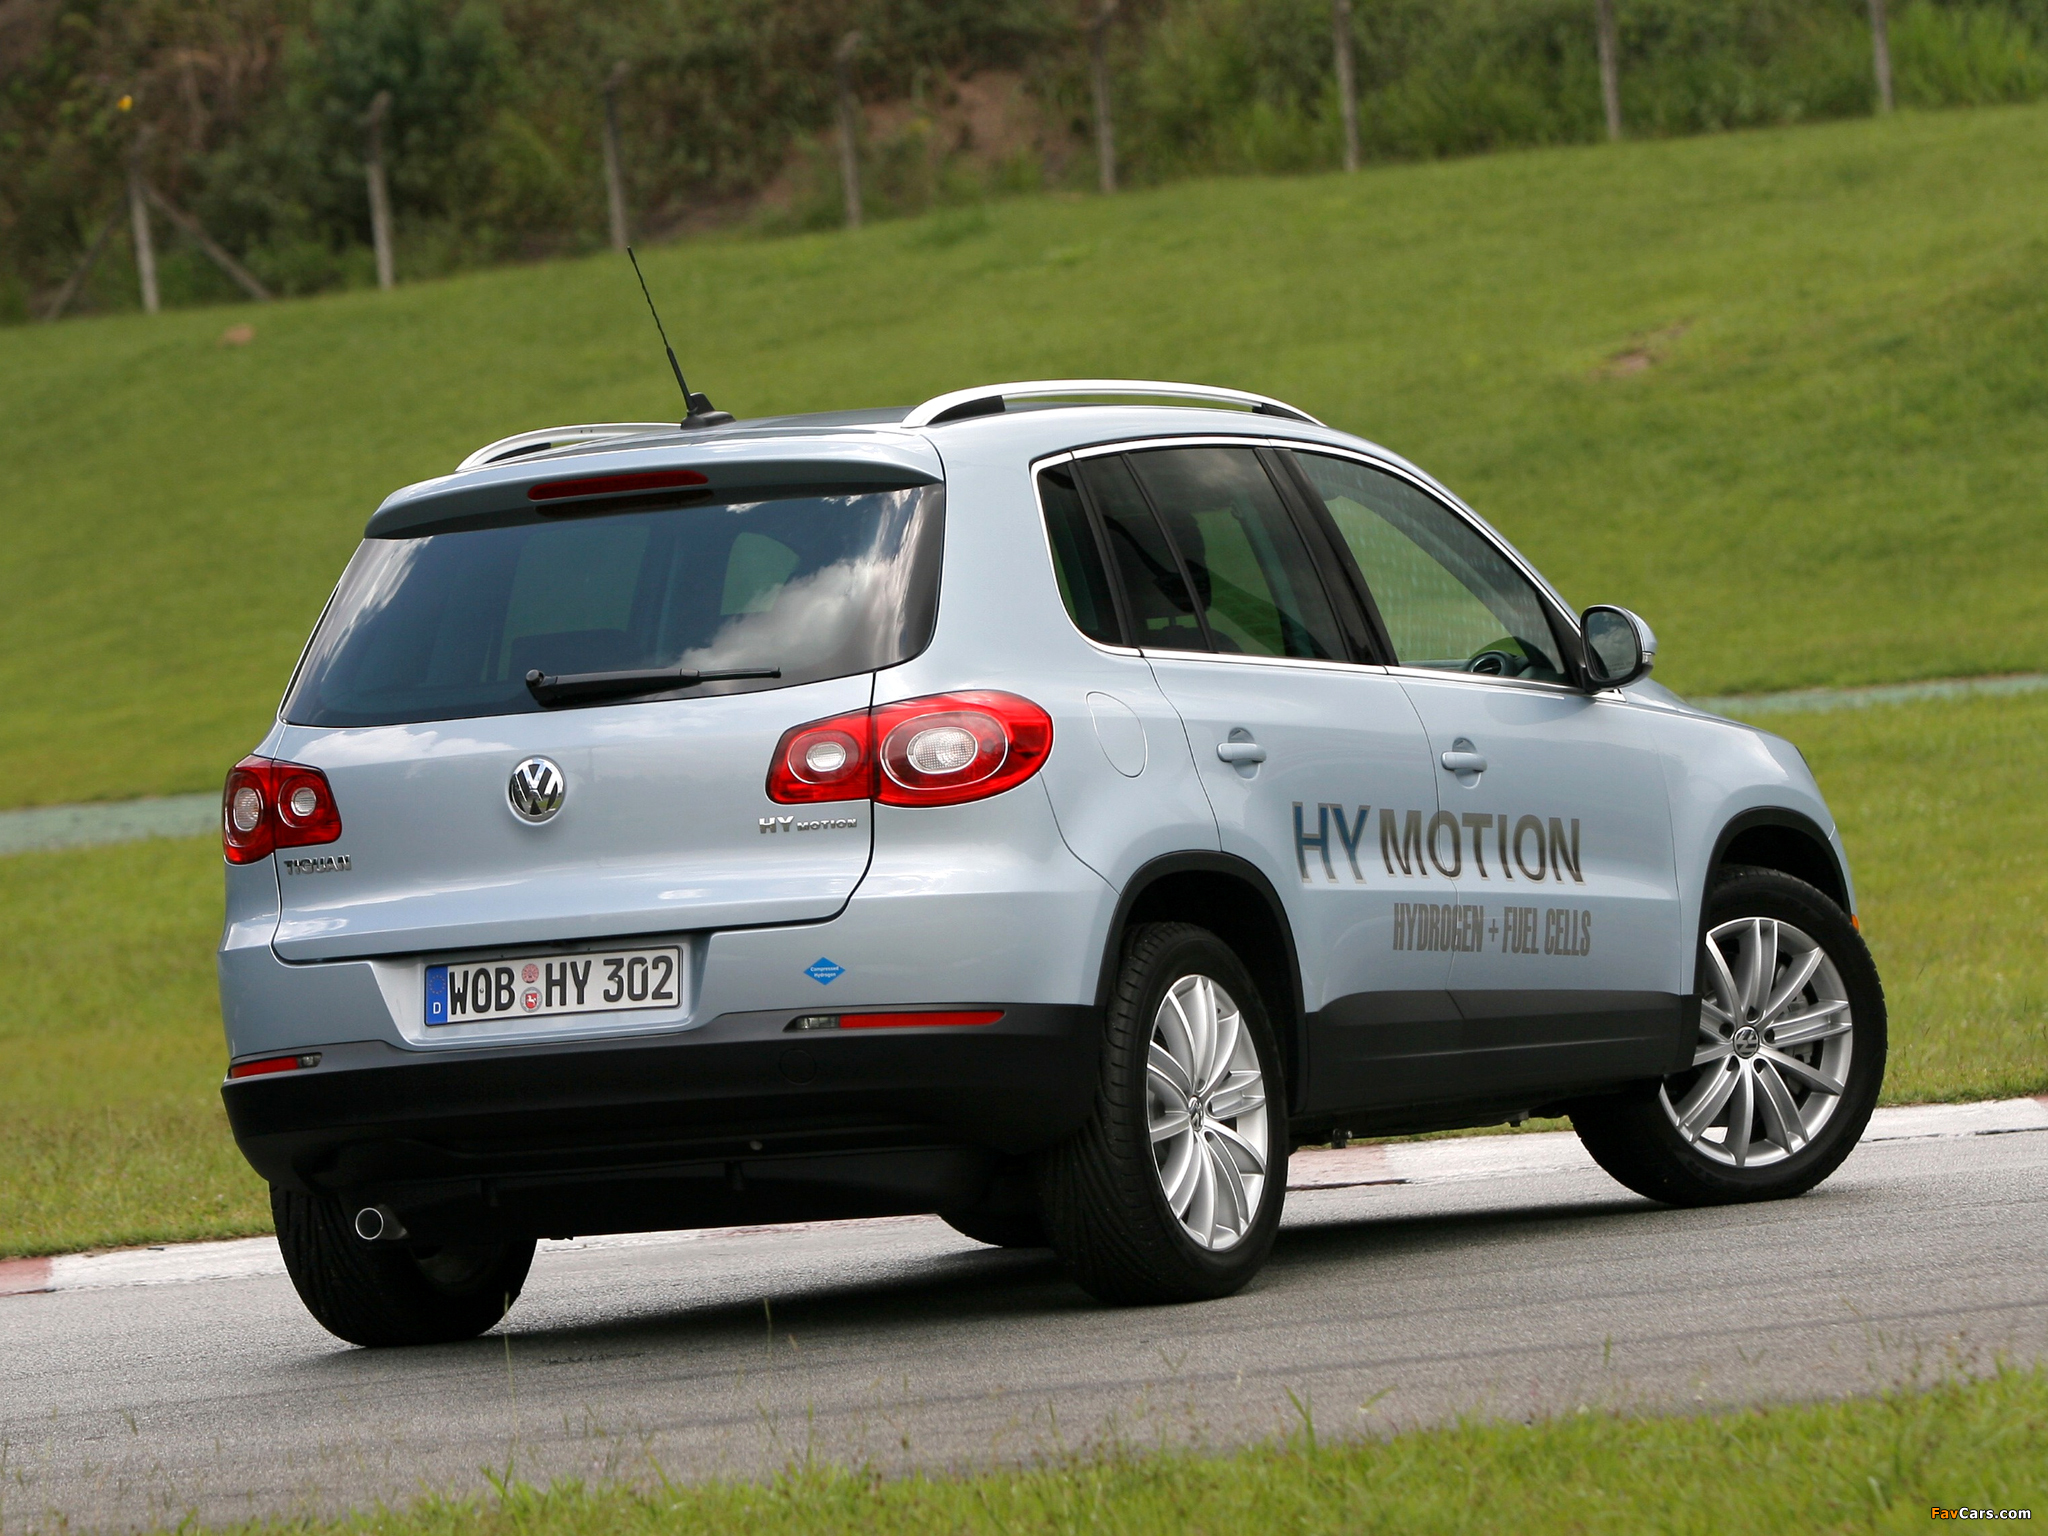 Volkswagen Tiguan HY Motion Concept 2007 pictures (2048 x 1536)